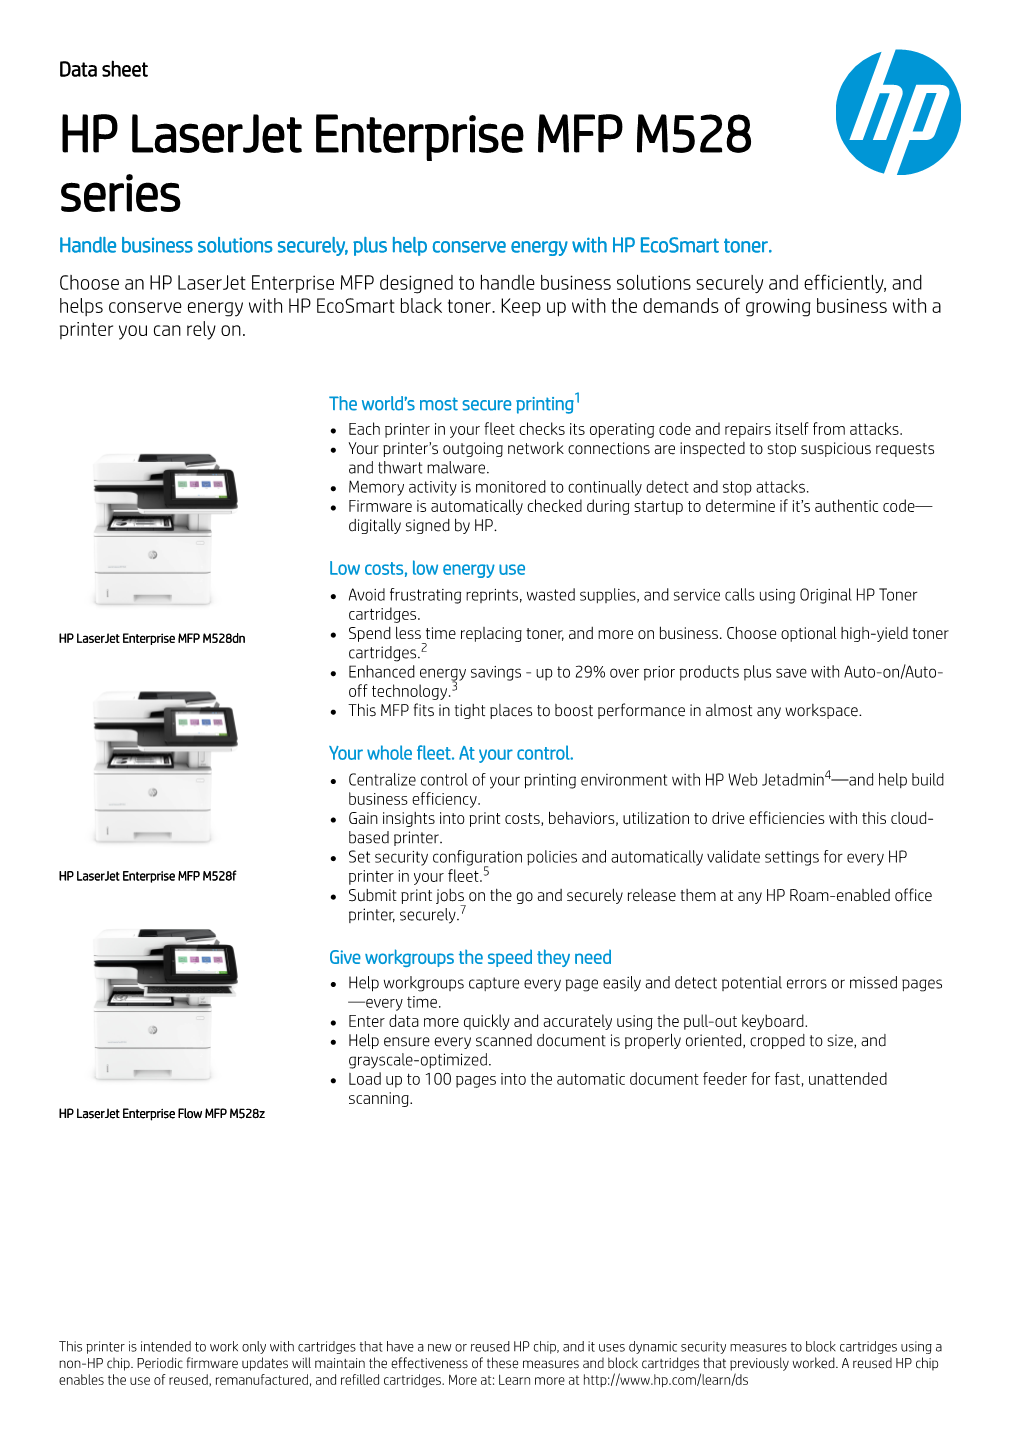 HP Laserjet Enterprise MFP M528 Series Handle Business Solutions Securely, Plus Help Conserve Energy with HP Ecosmart Toner